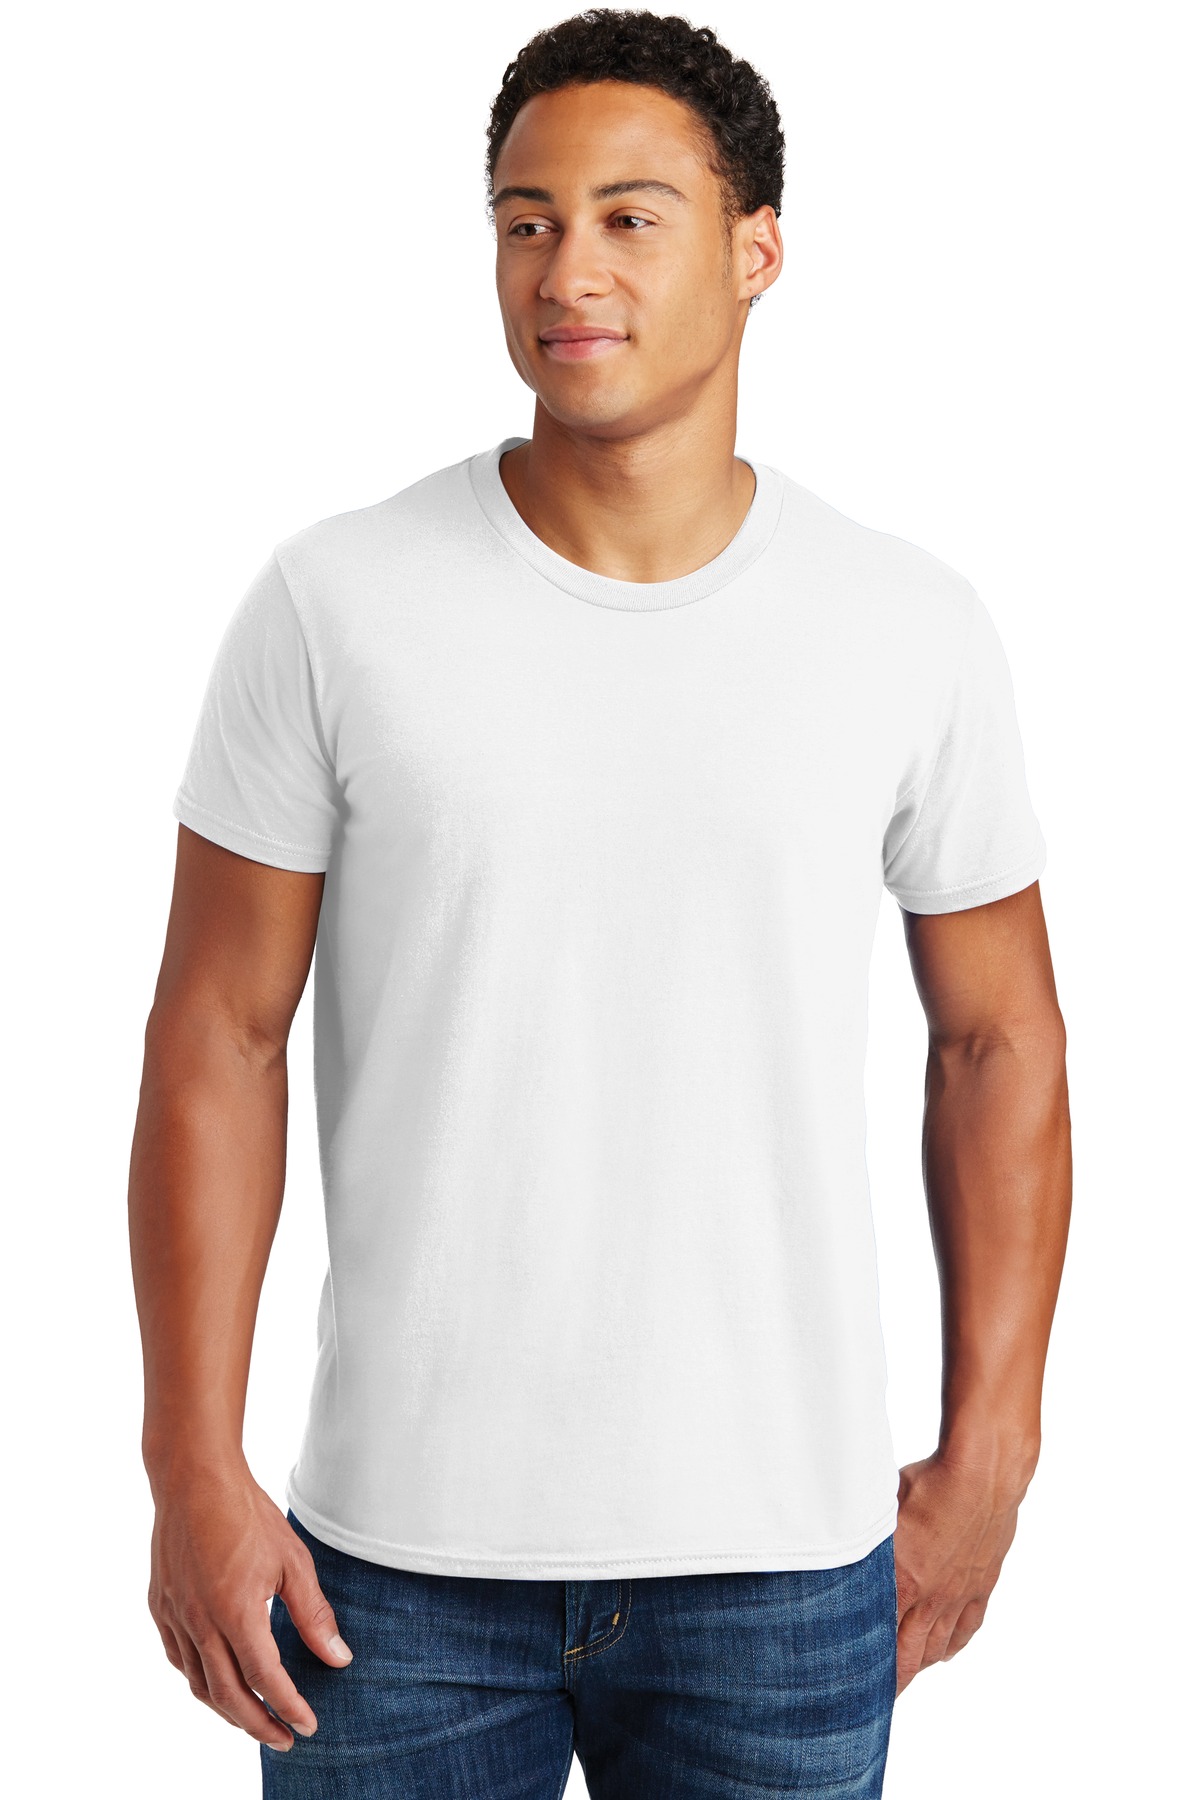 Hanes - Perfect-T Cotton T-Shirt-Hanes